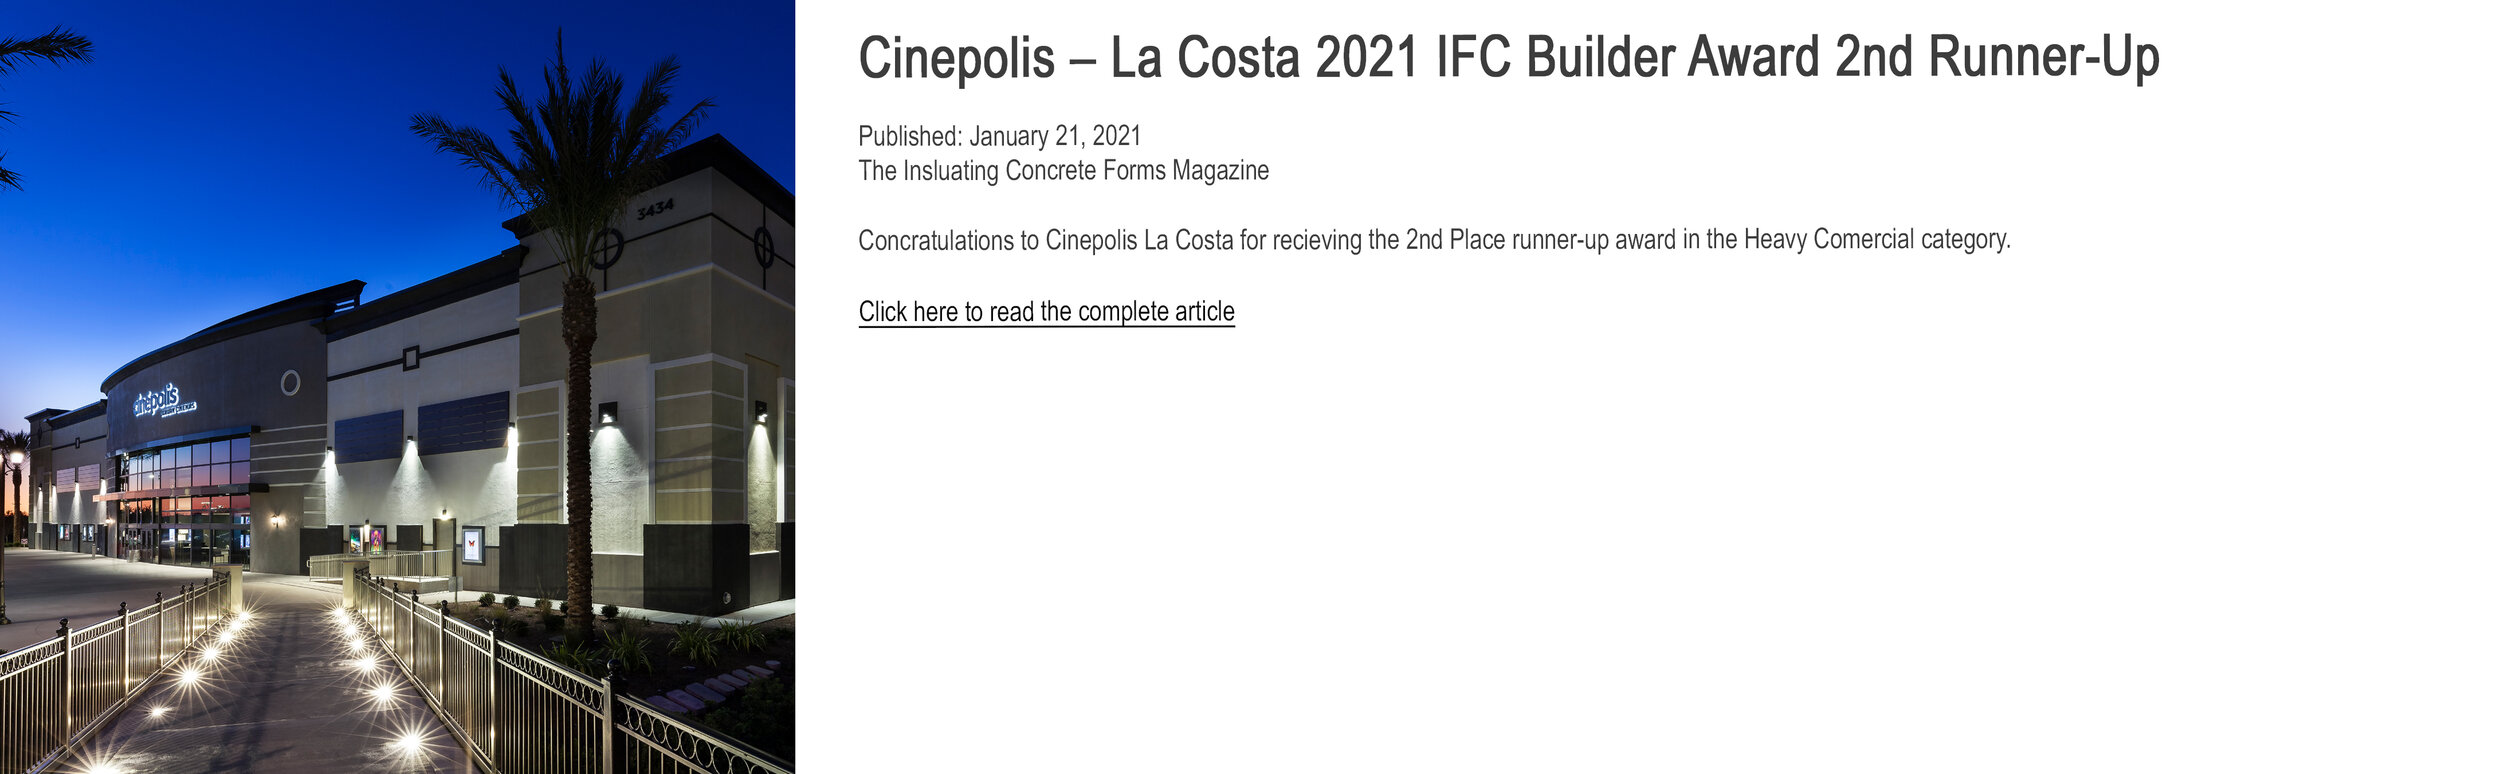 Cinepolis La Costa.jpg